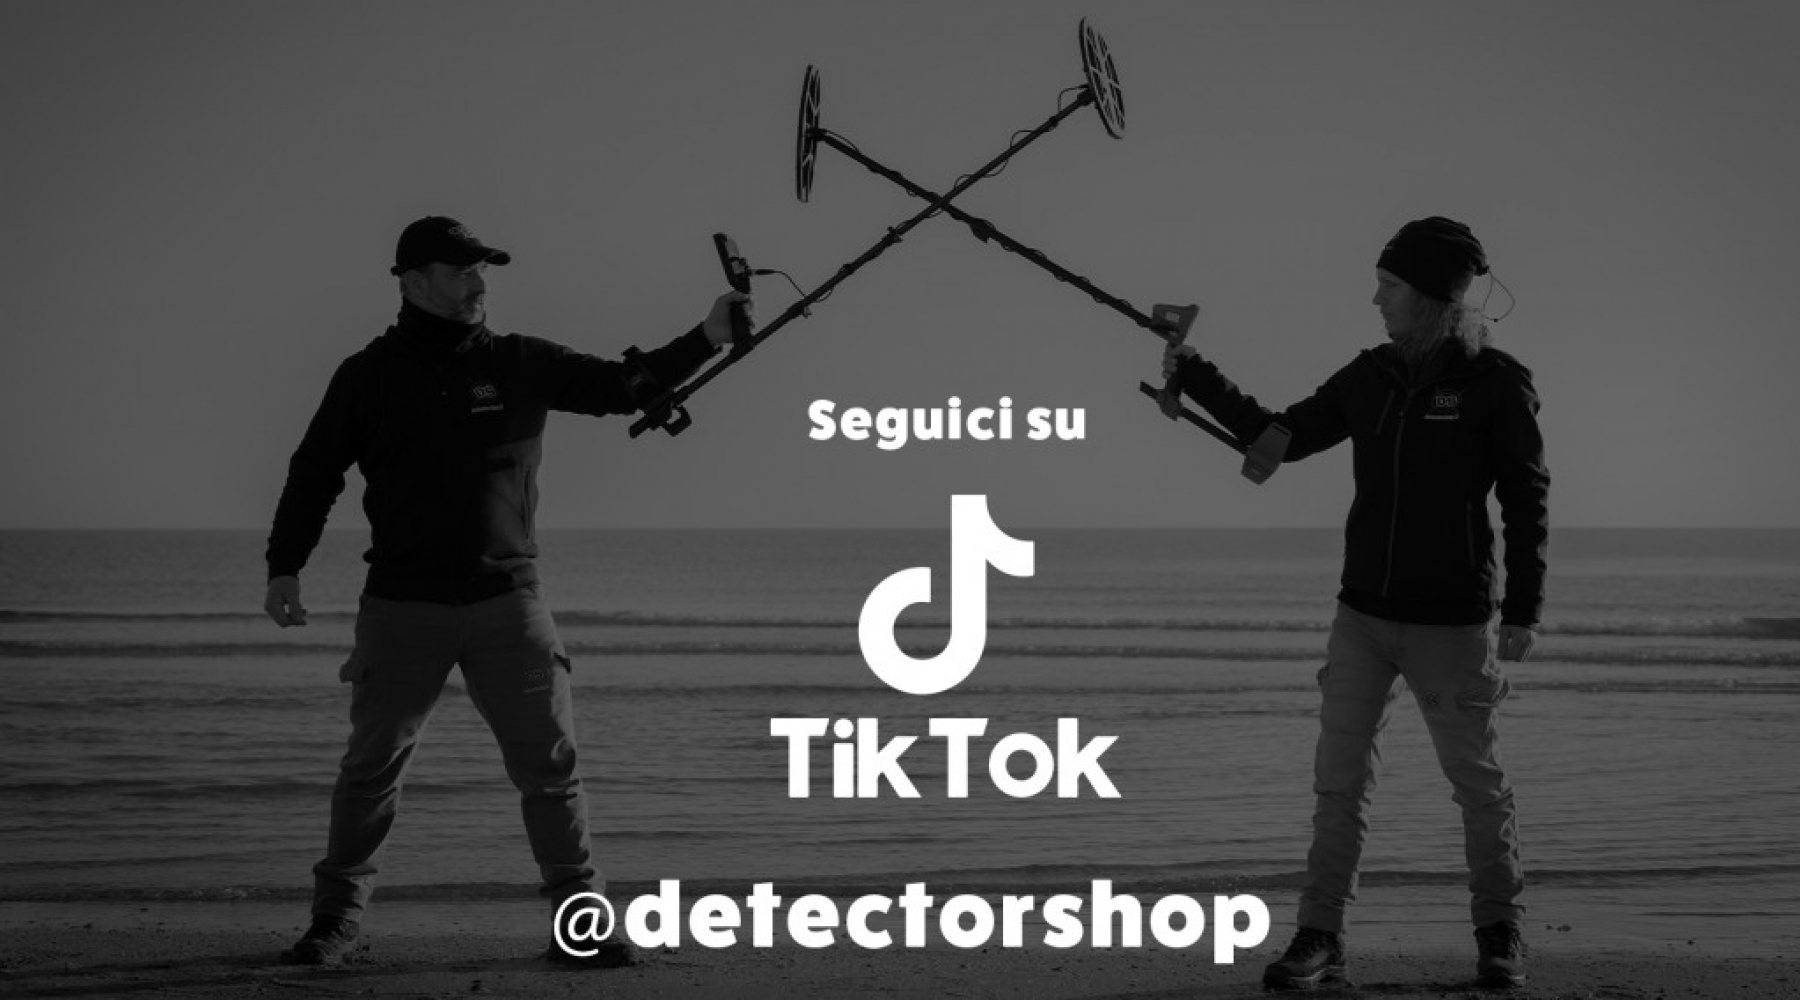 Explore Metal Detecting with Detectorshop on TikTok!